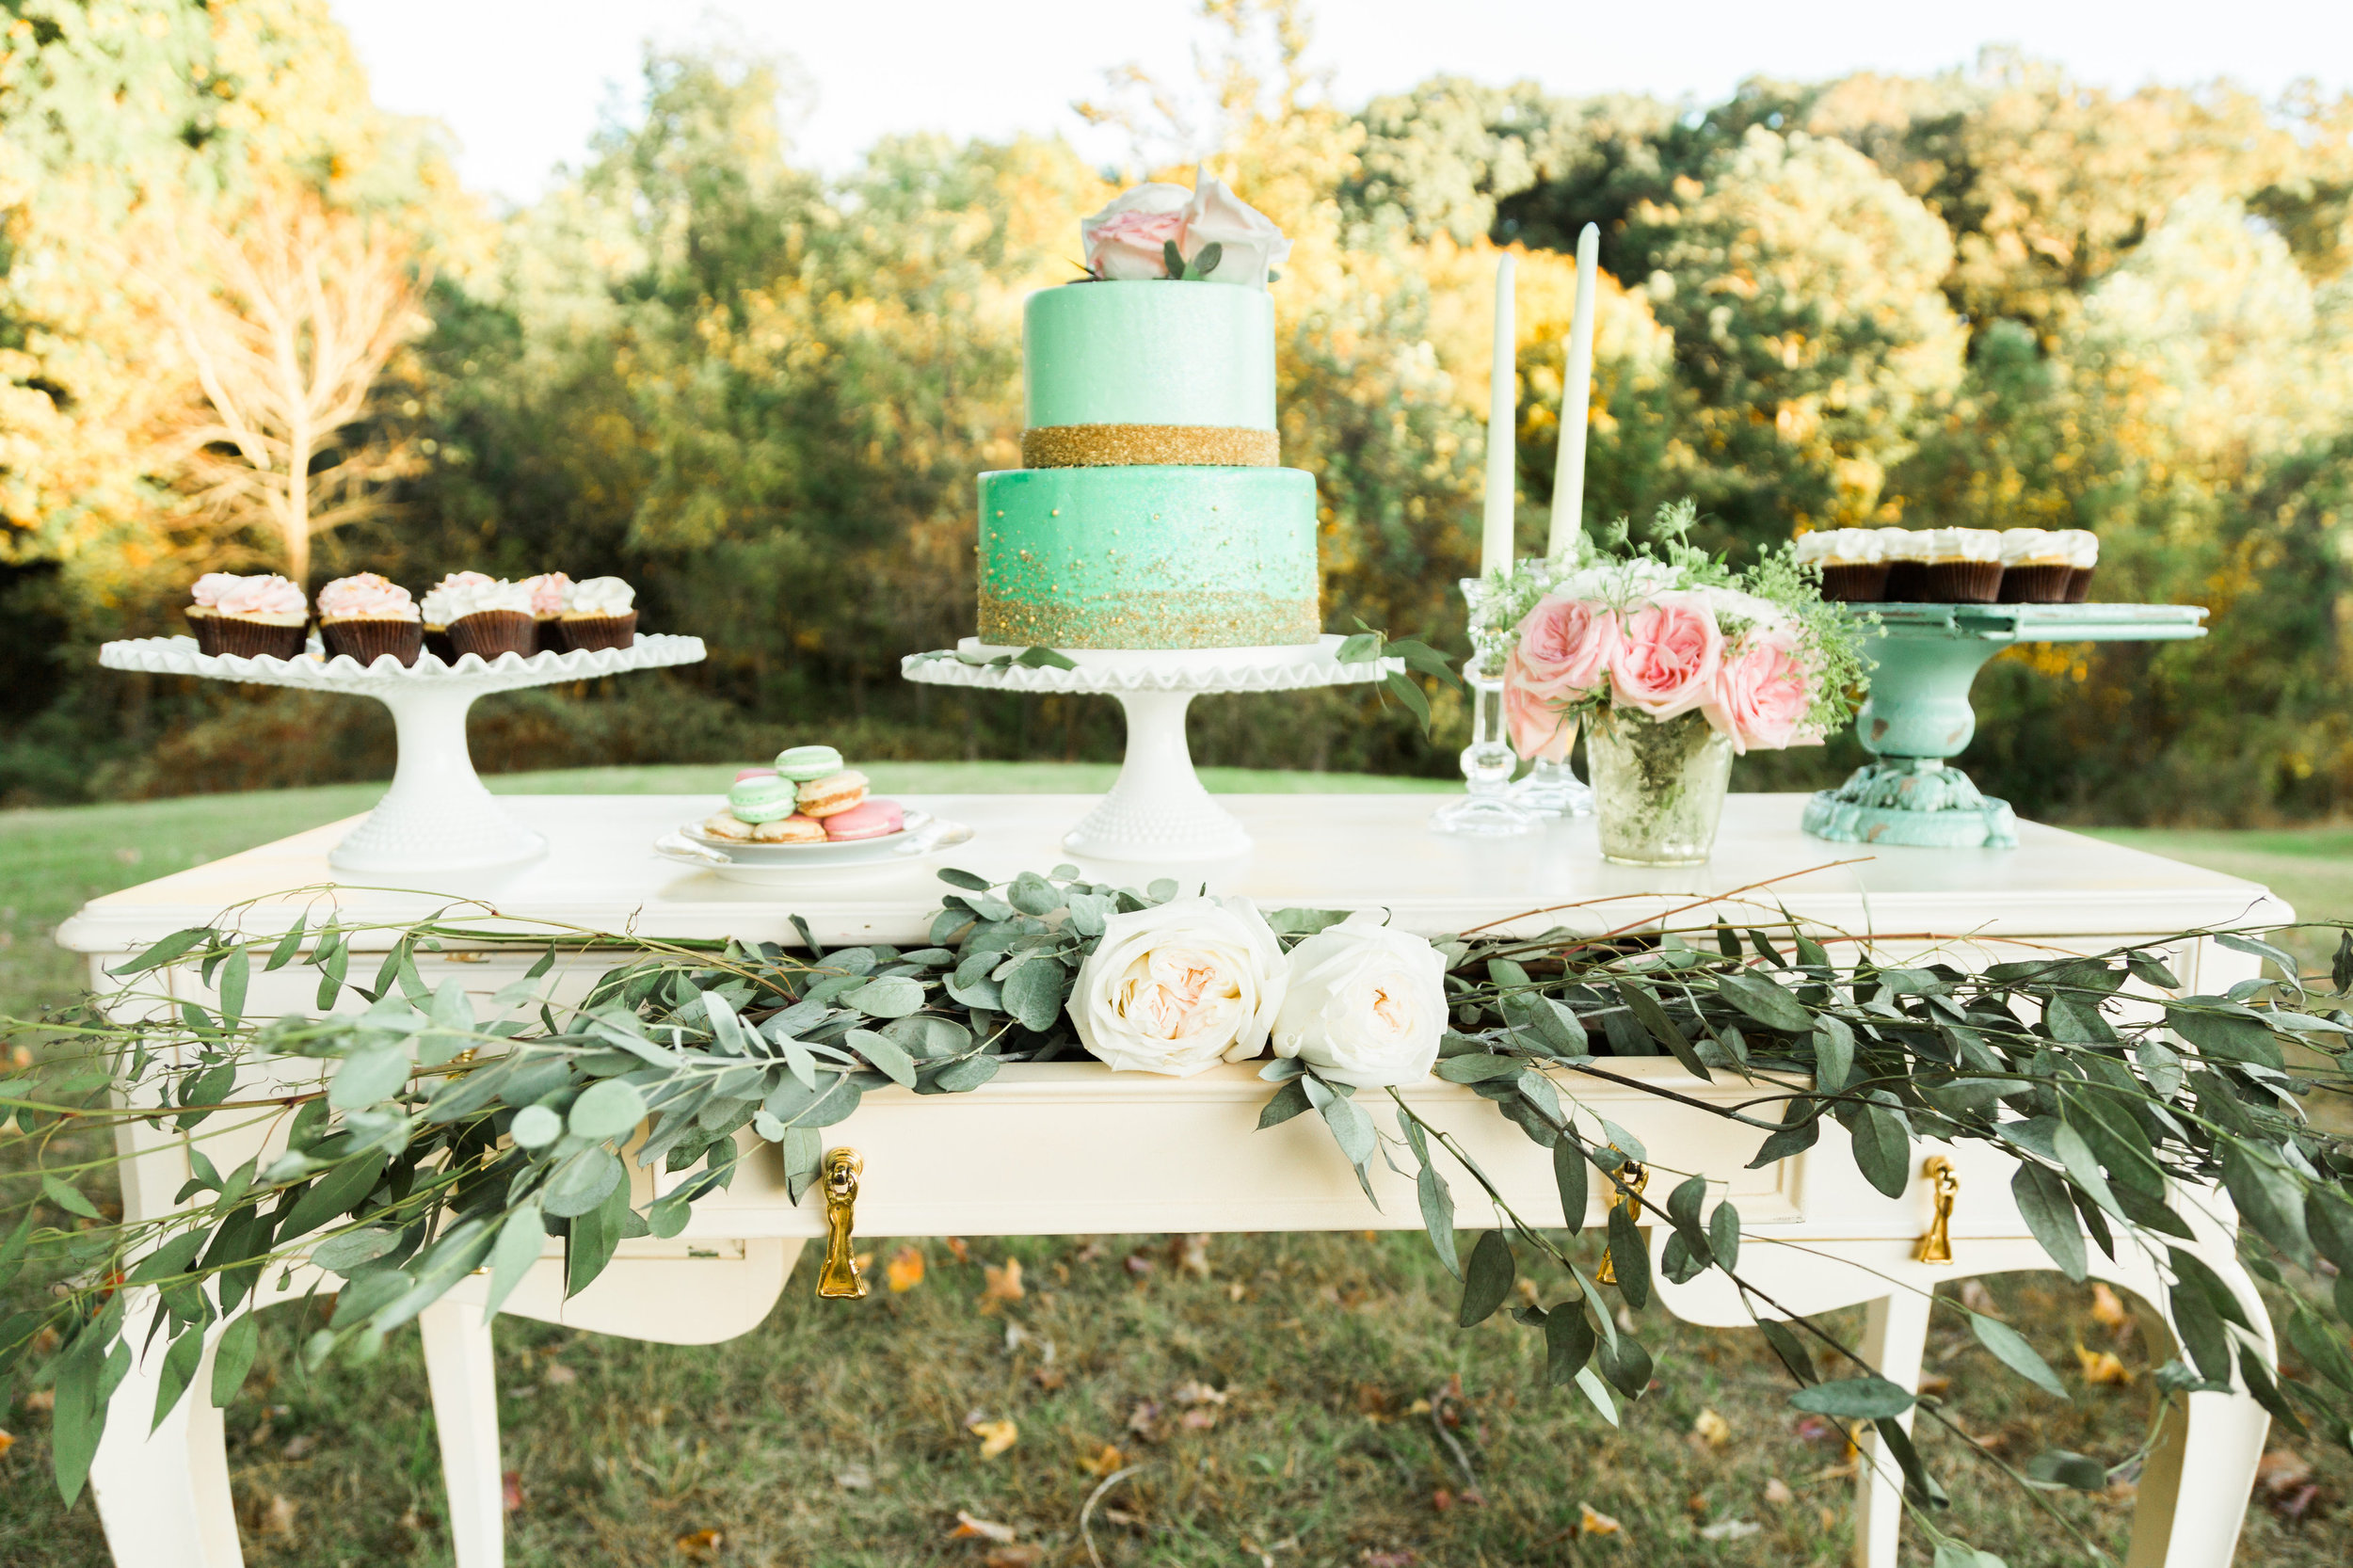 wedding dessert display - alicia wiley photography - Copy.jpg